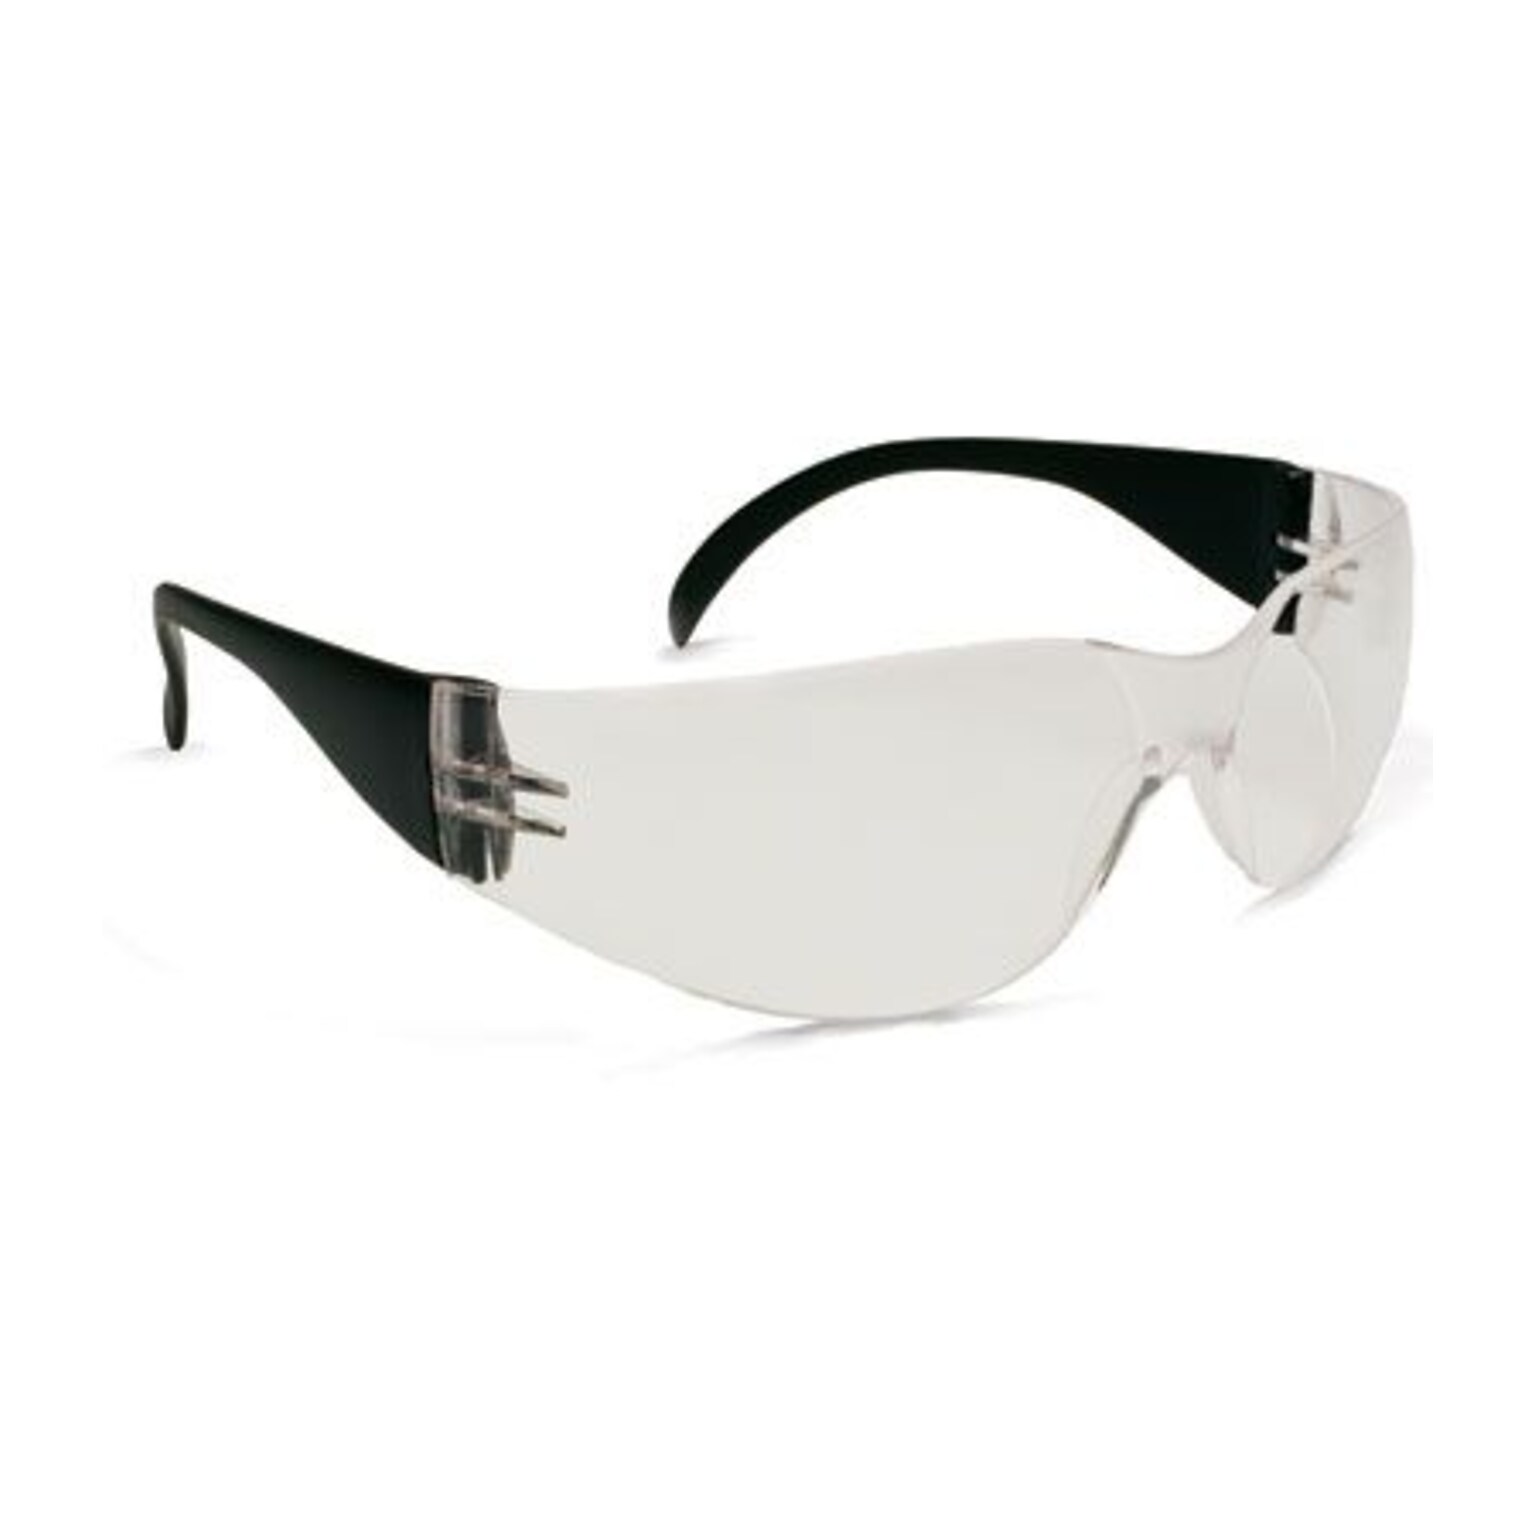 Bouton Z12 Glasses, Clear Anti-Scratch Lens, Black Temples, Relaxed Bridge, Flexible Temples, Anti-Fog, Each (250-01-0020)